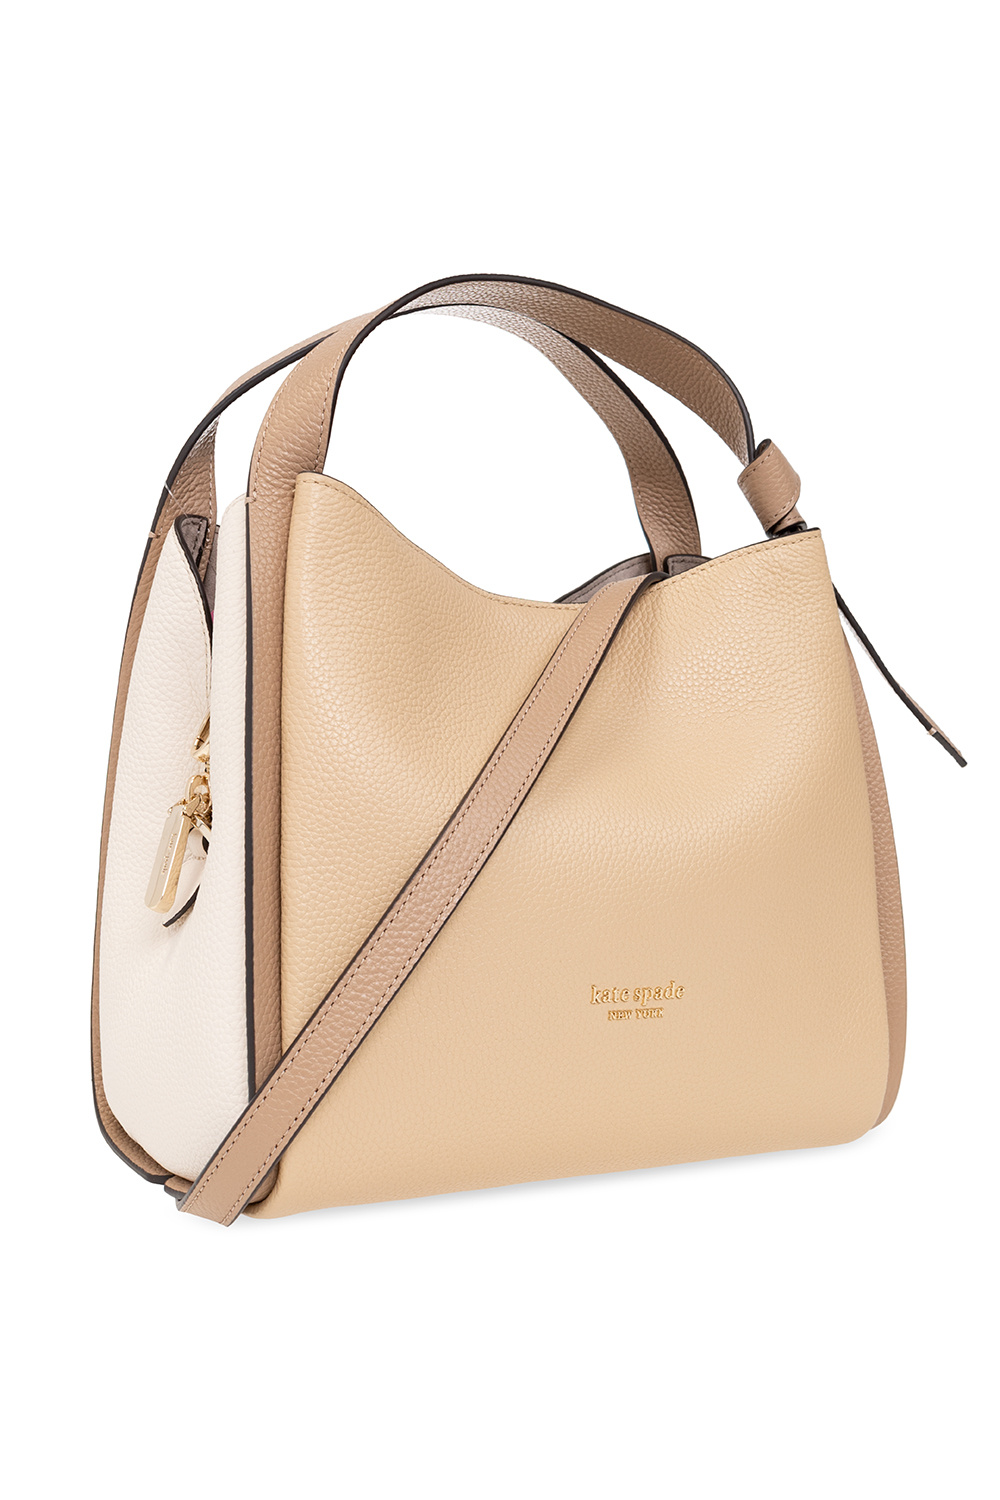 Buy Coach Black Hadley 21 Medium Hobo Bag for Women Online @ Tata